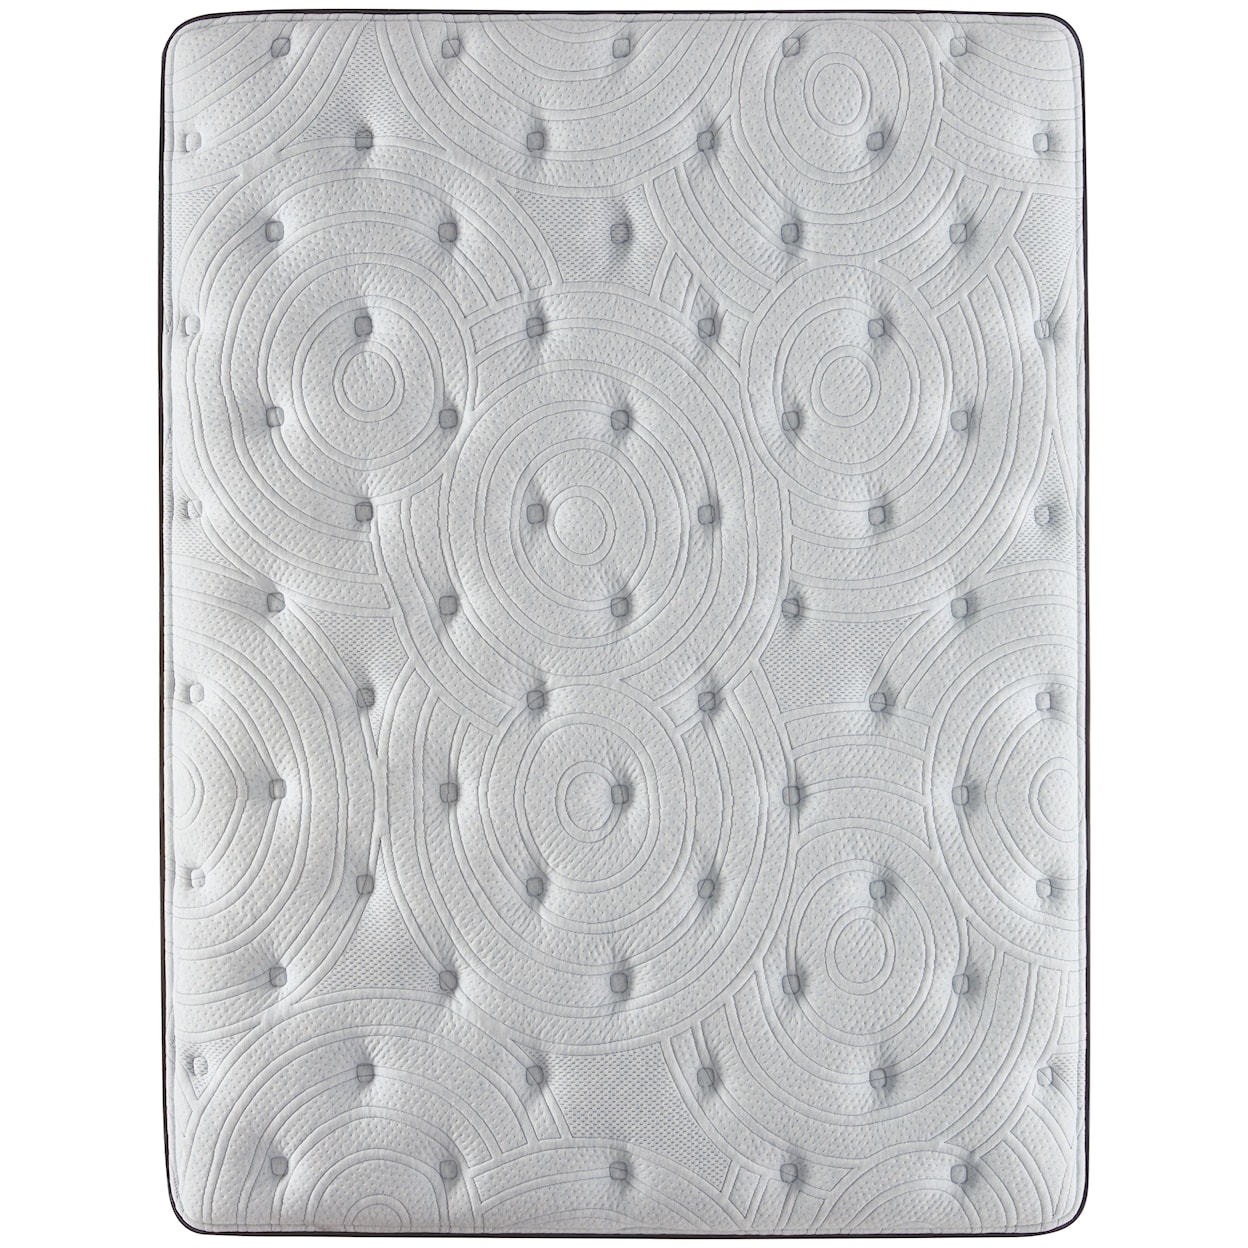 Serta Renewed Sleep Plush PT Queen 17" Plush Pillow Top Mattress Set